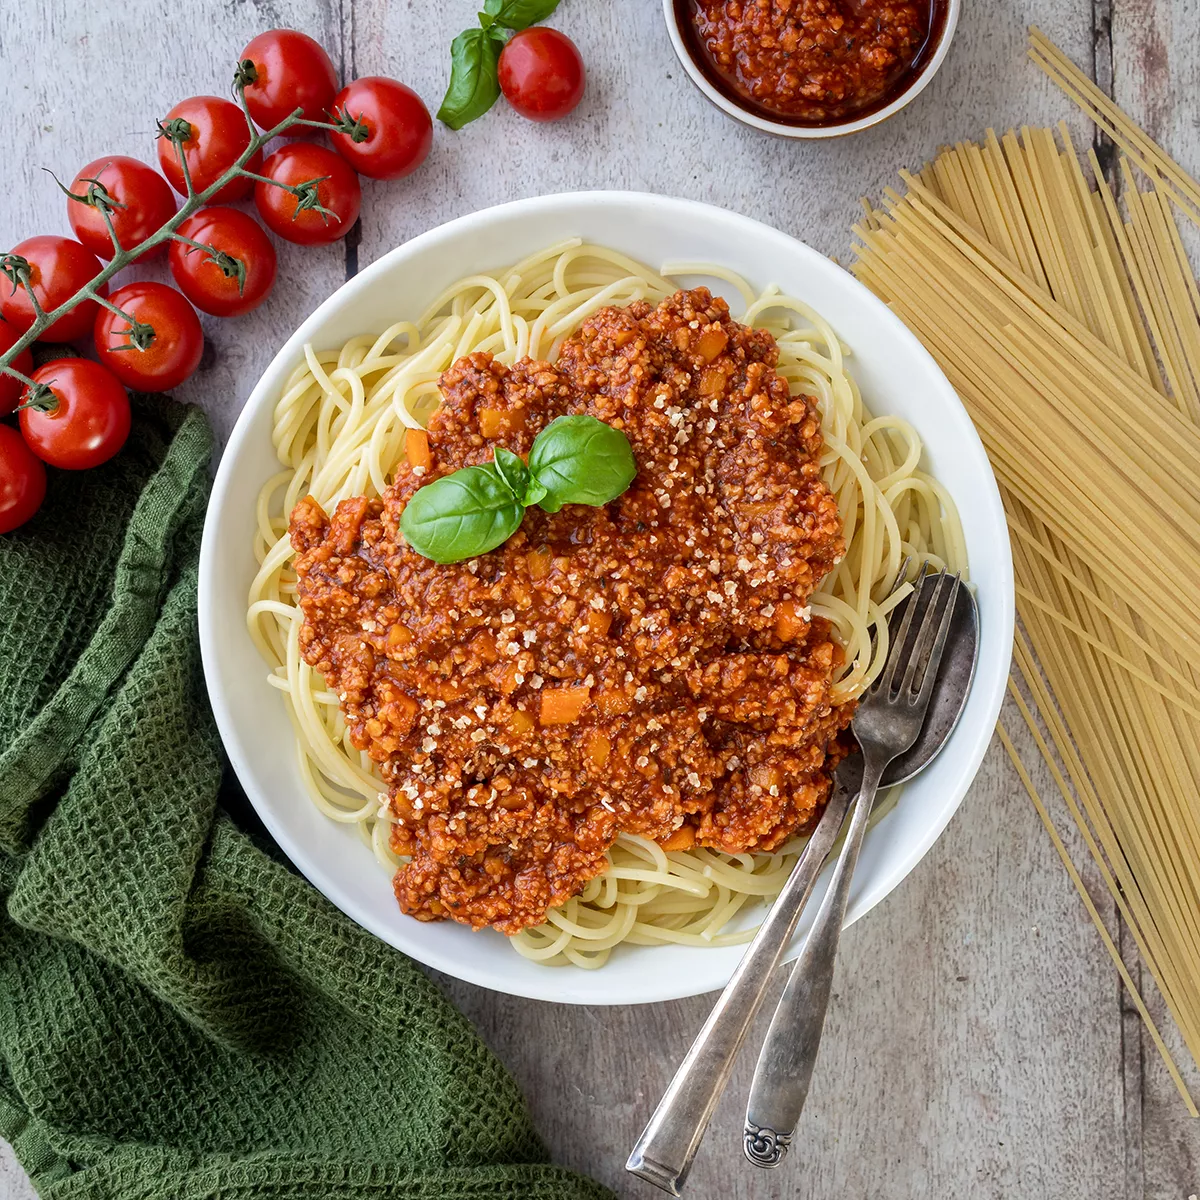 Spaghetti mit Soja-Bolognese